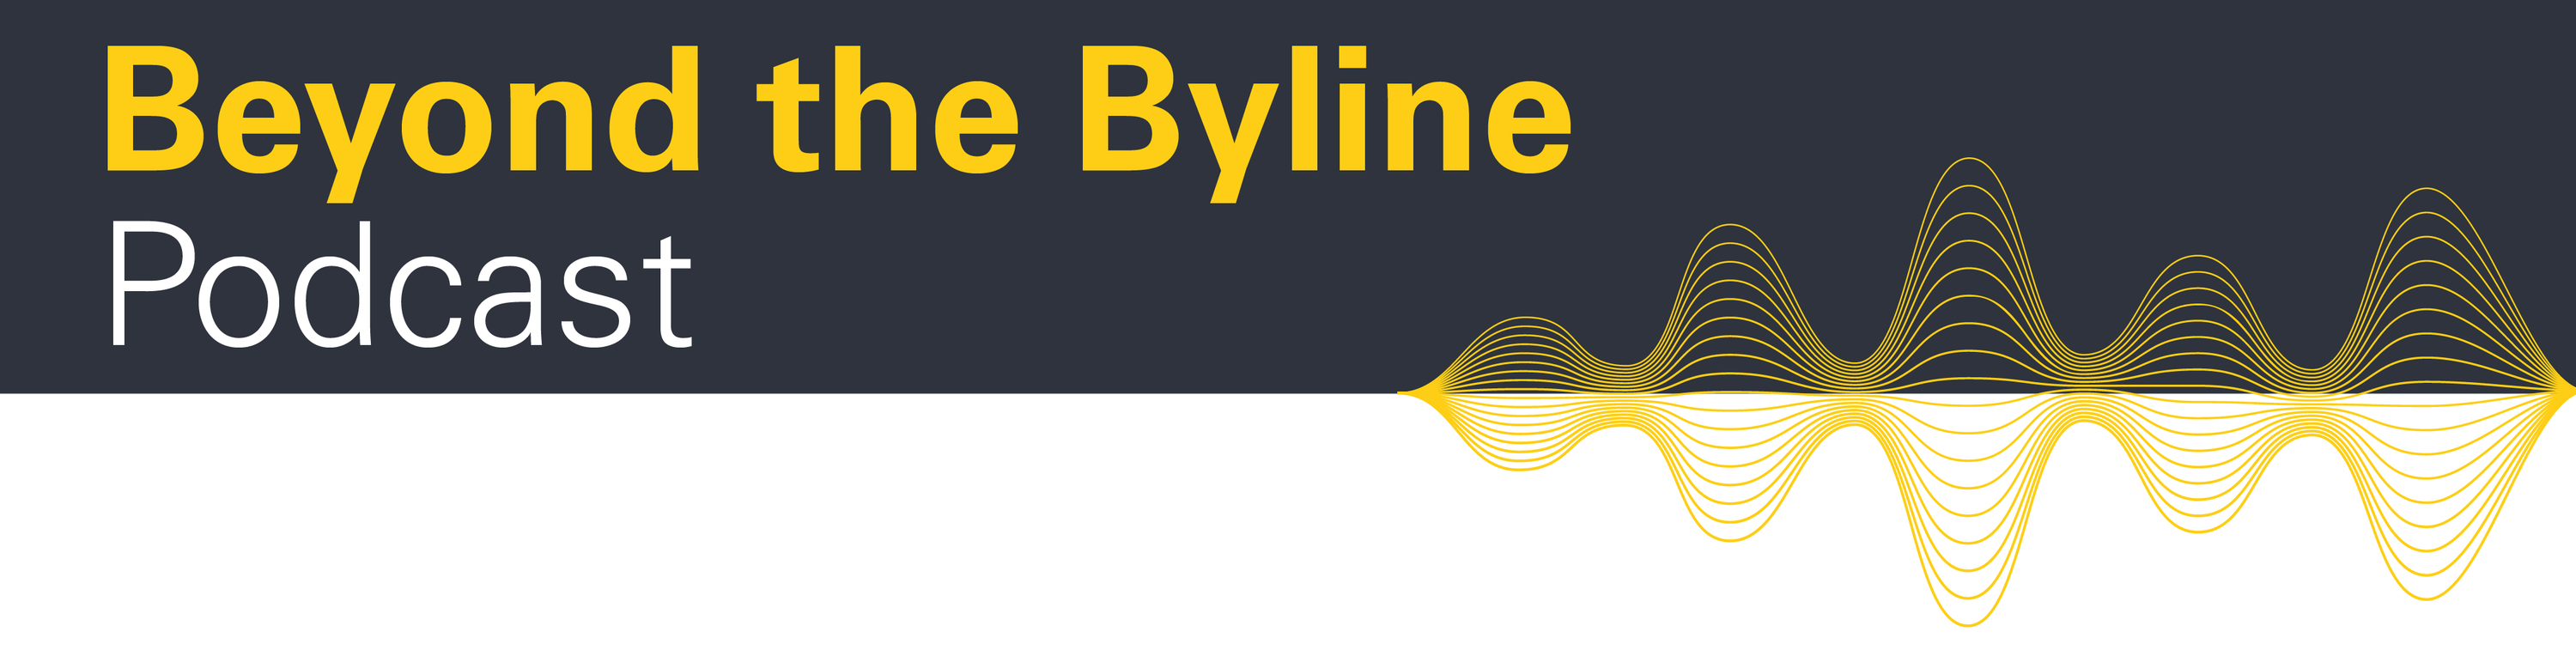 Beyond the Byline Section Header Image